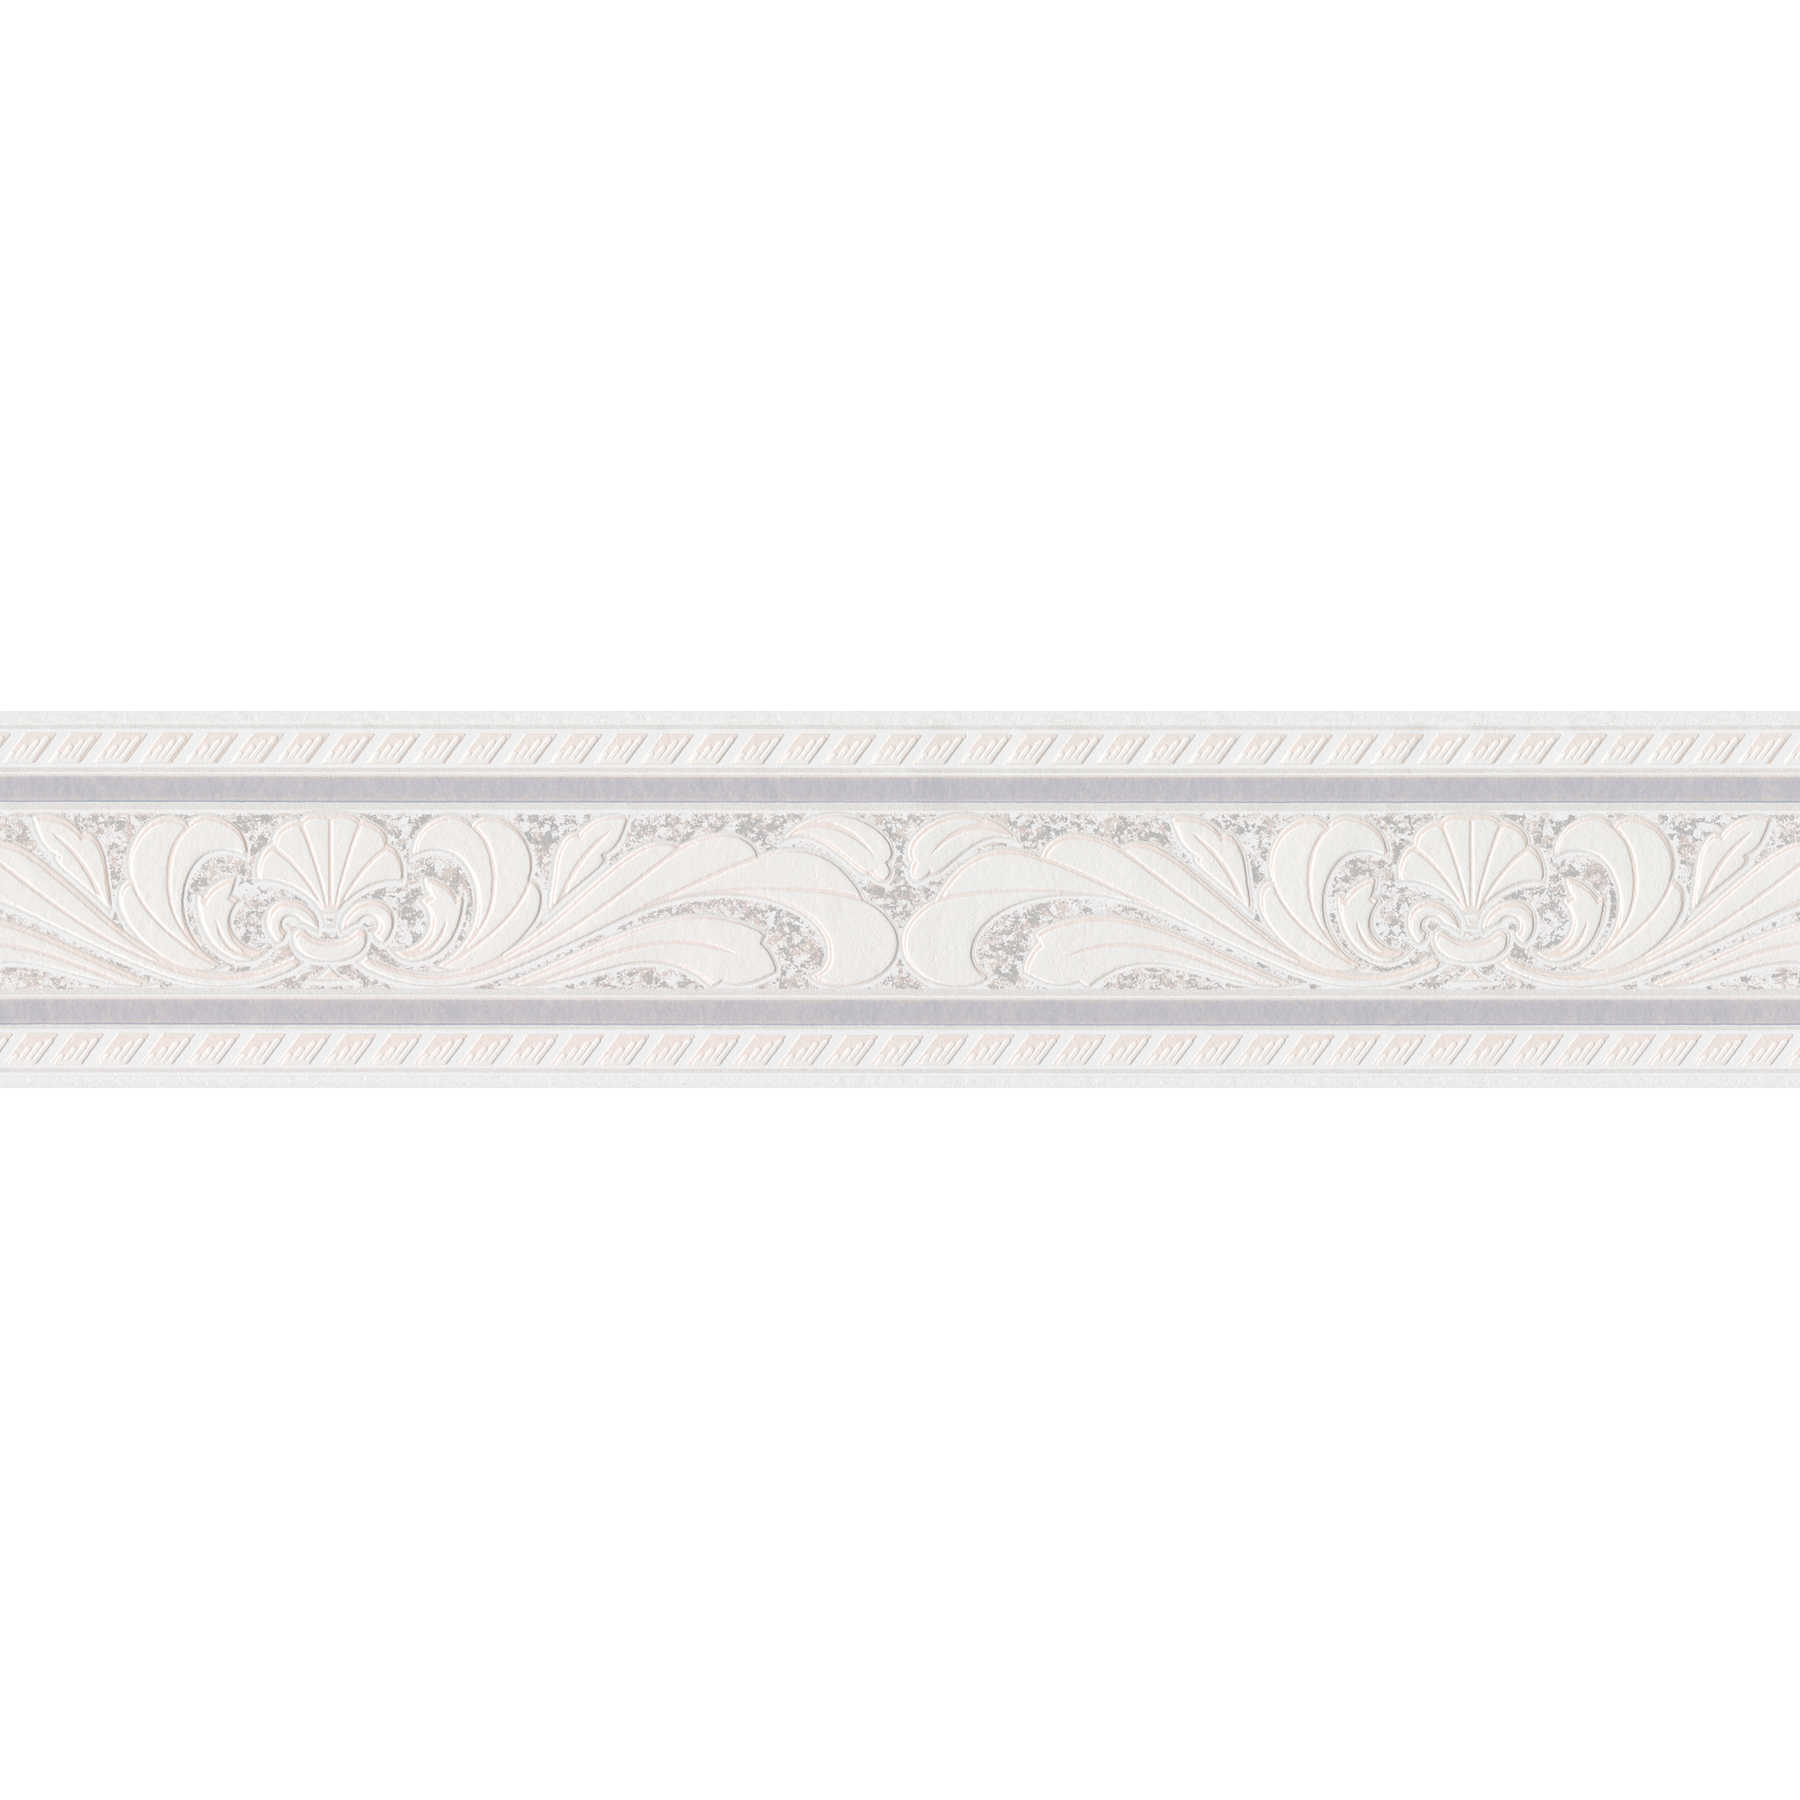             Tapetenbordüre mit Klassizismus Design – Creme, Weiß
        